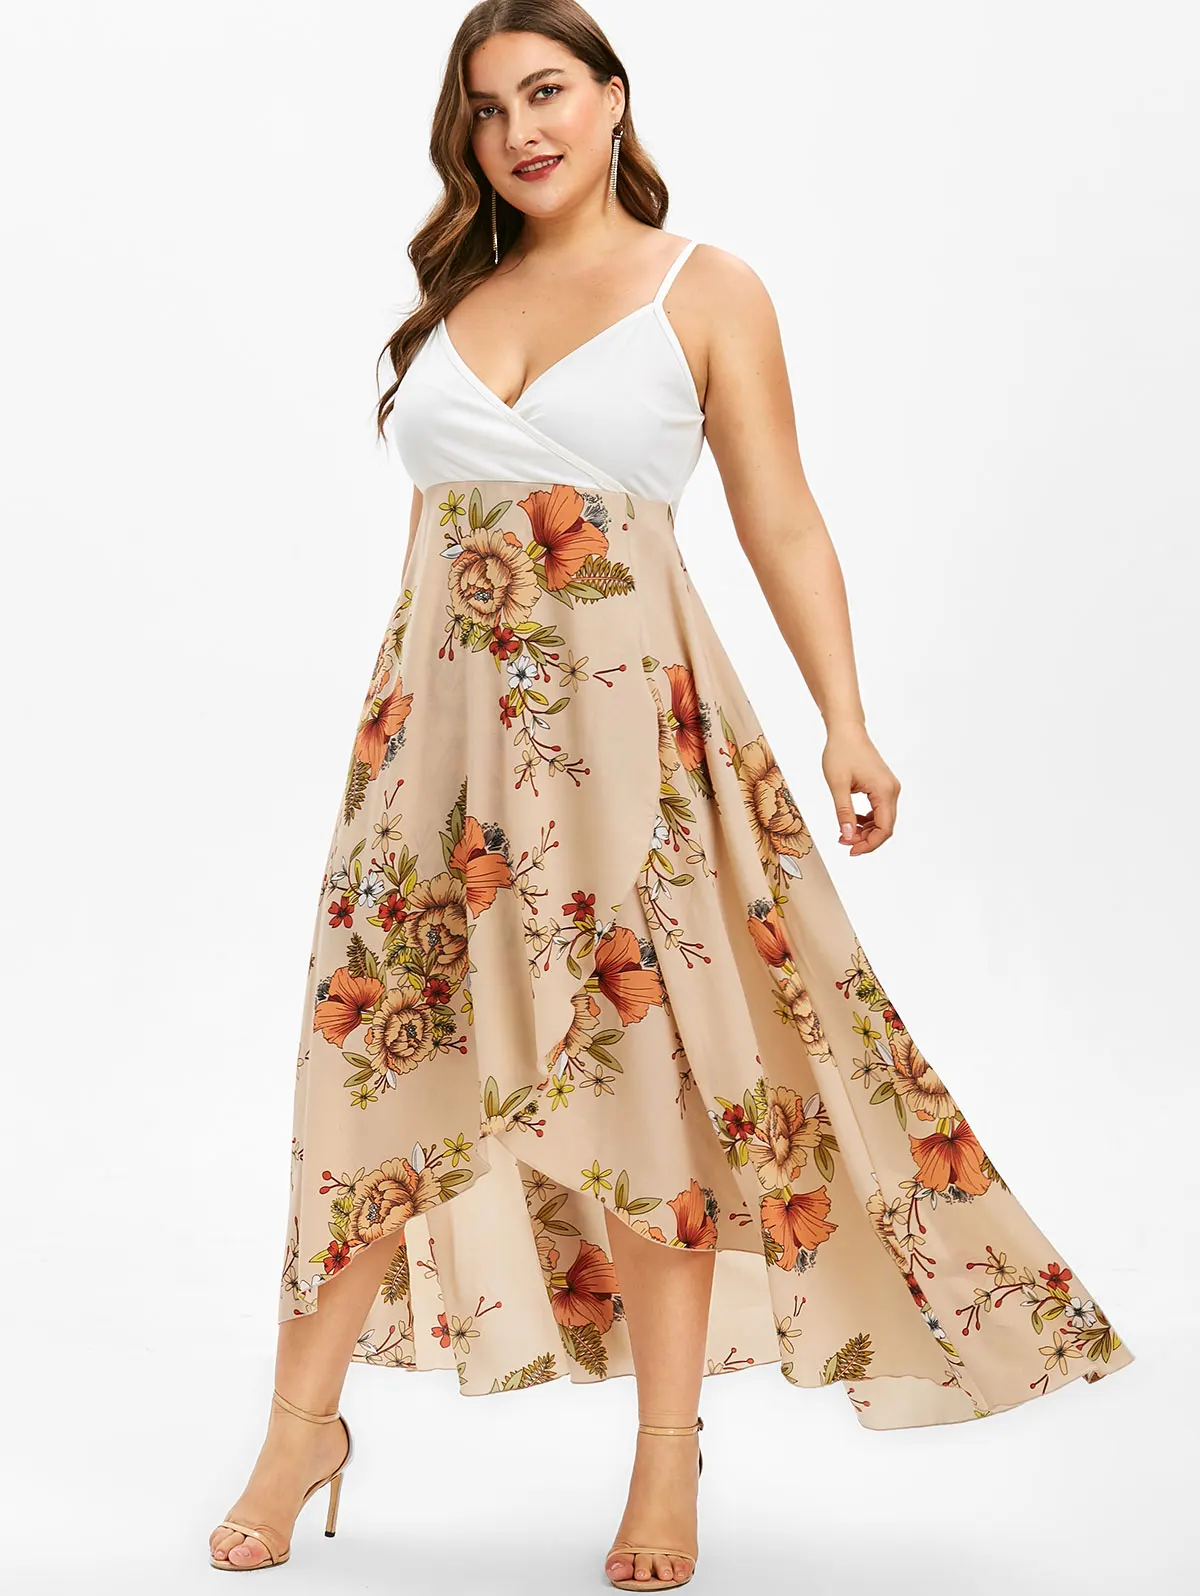 

ROSEGAL Plus Size Summer Floral Print Overlap Slip Dress Spaghetti Strap Beach Boho Dress Women Casual A-Line Dress Vestidos